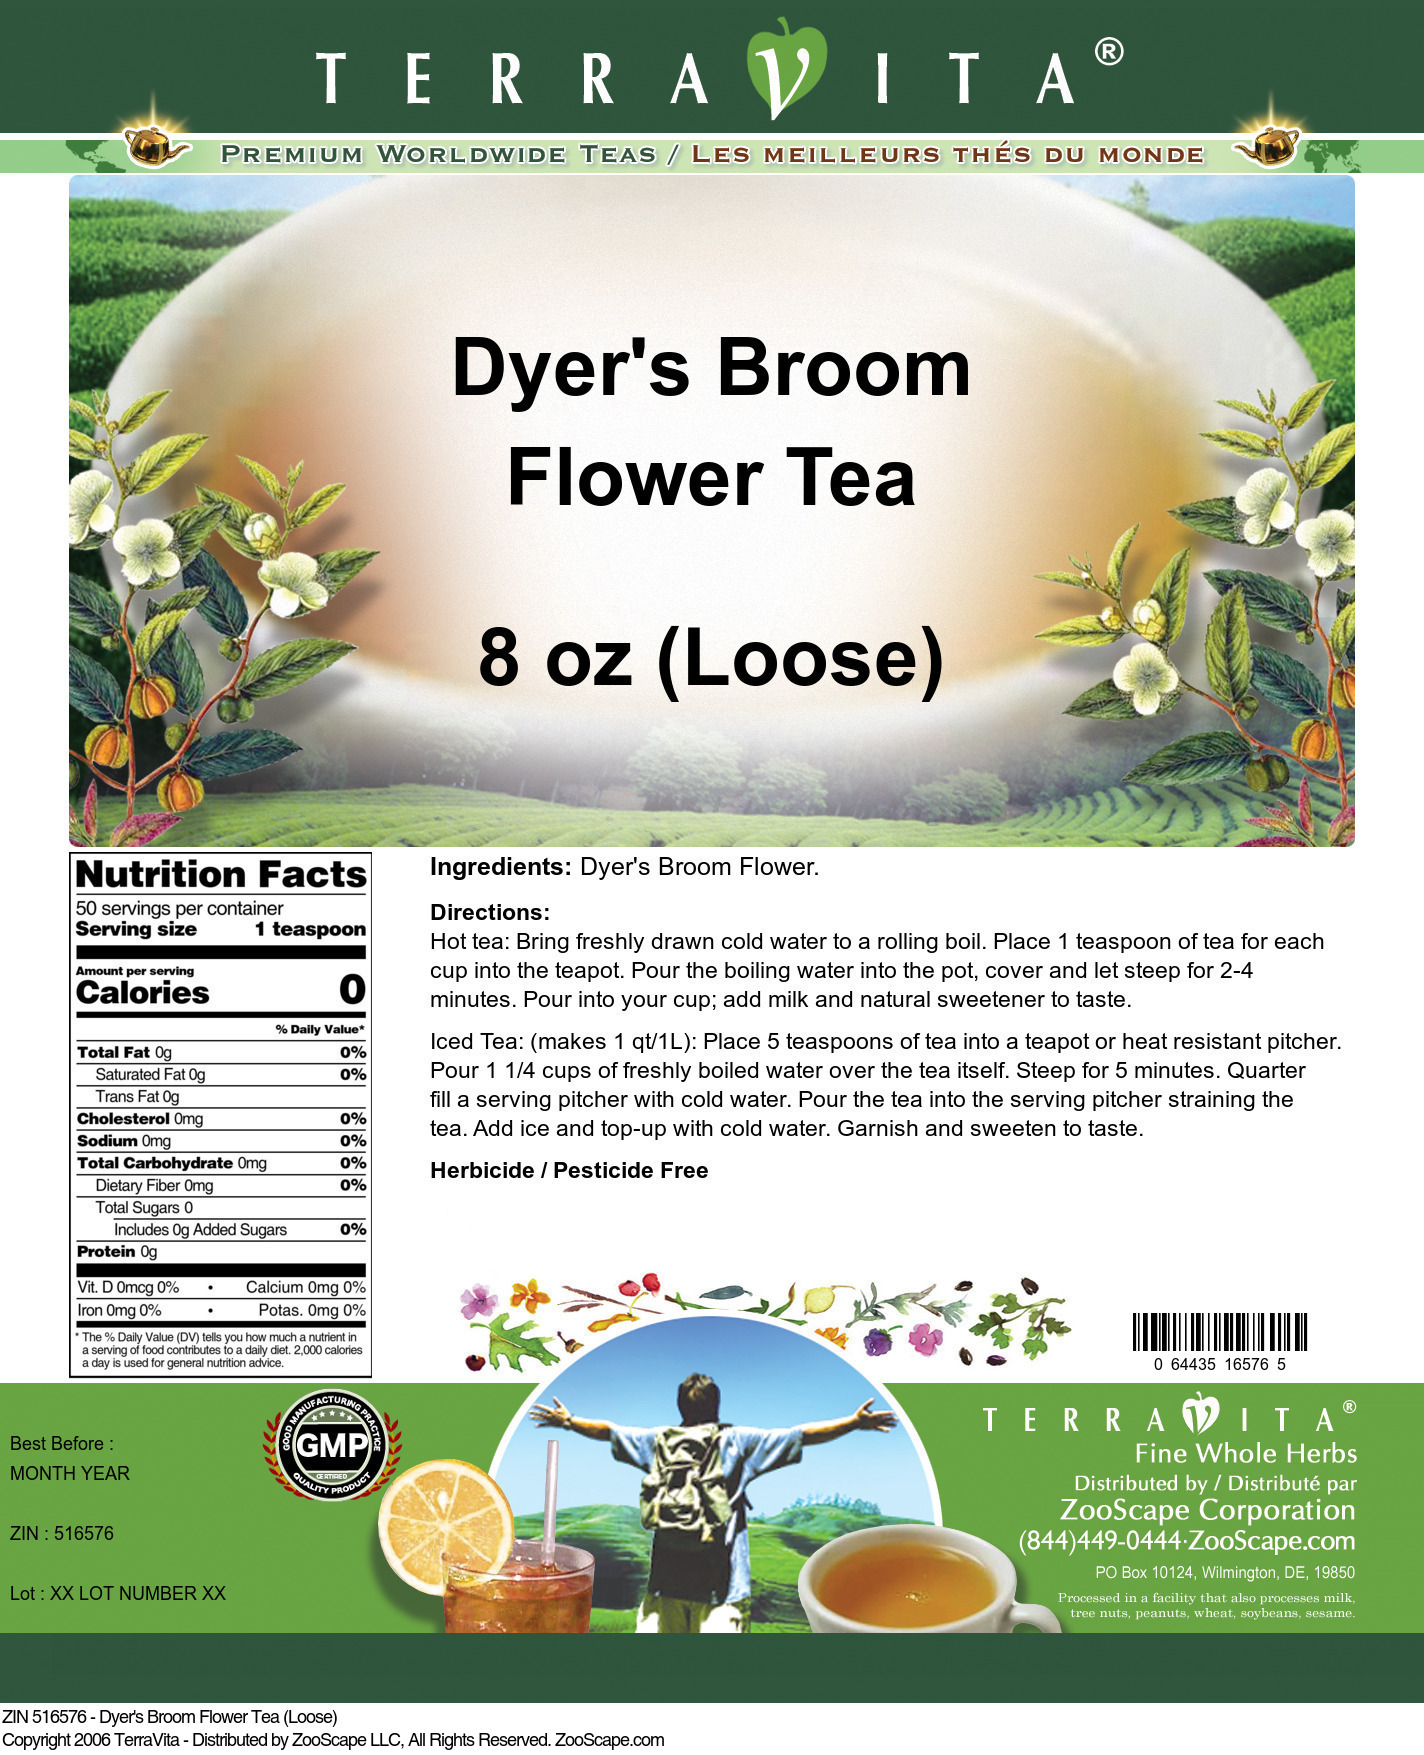 Dyer's Broom Flower Tea (Loose) - Label